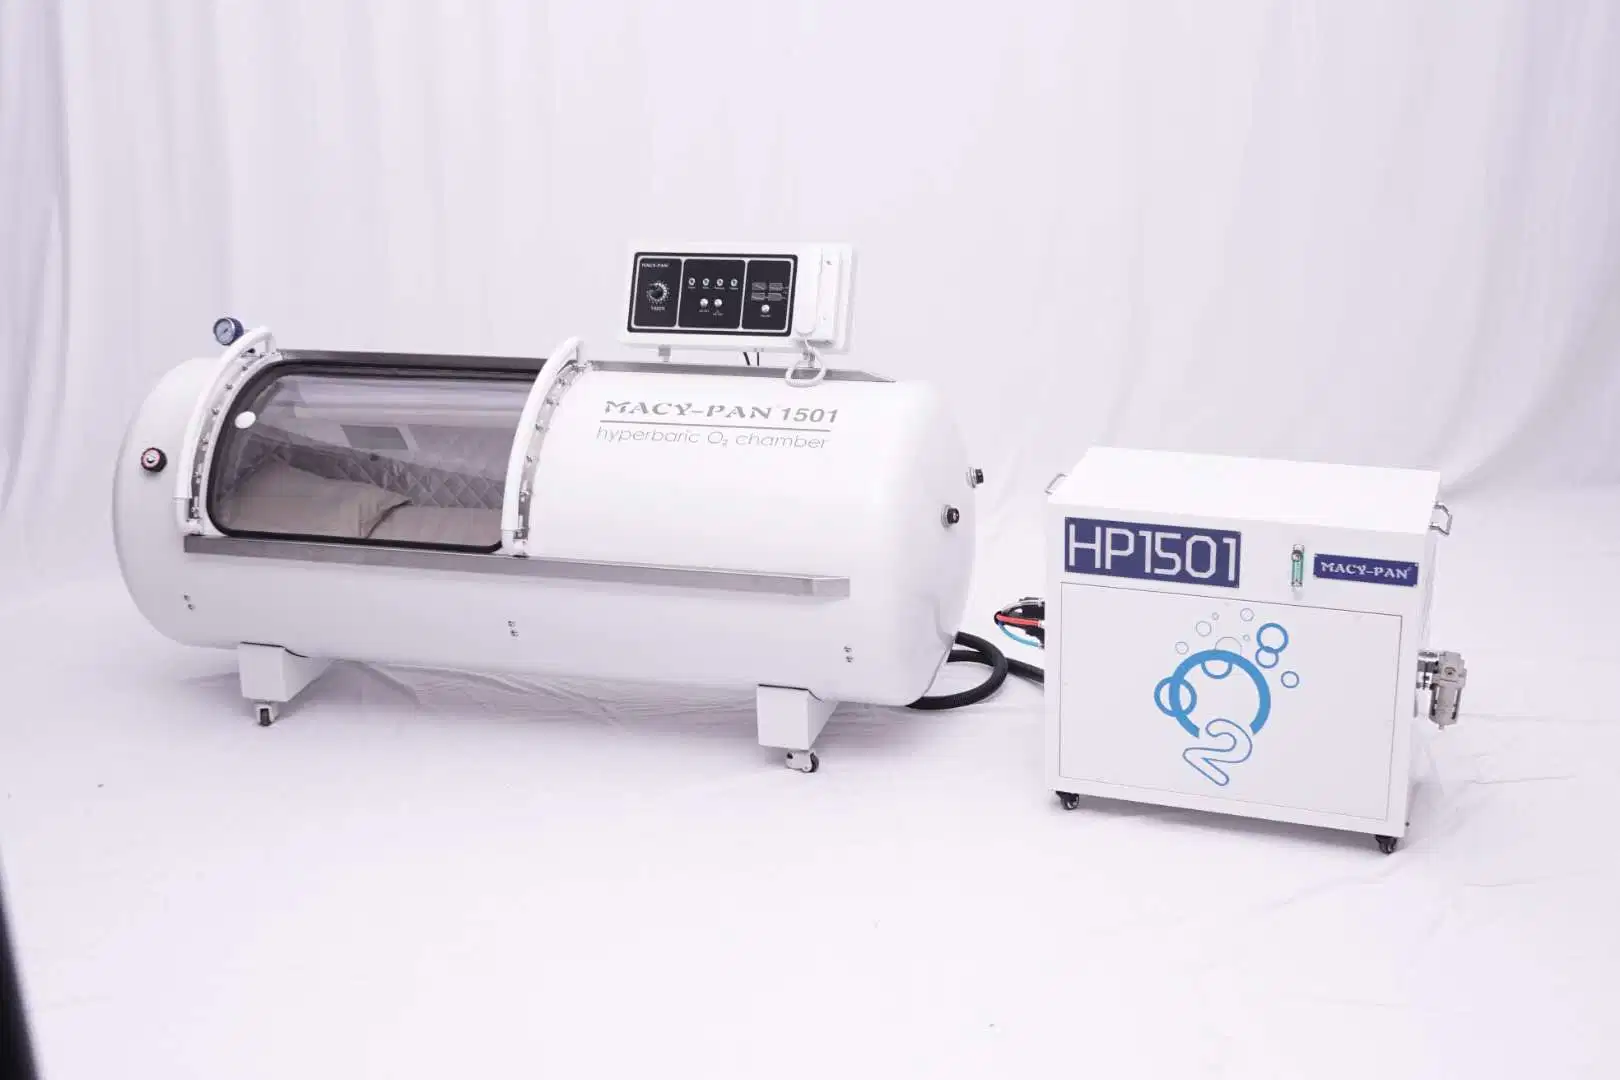 Кислород Hyperbaric камера жесткий спа капсула для Салон красоты, клиника, главная